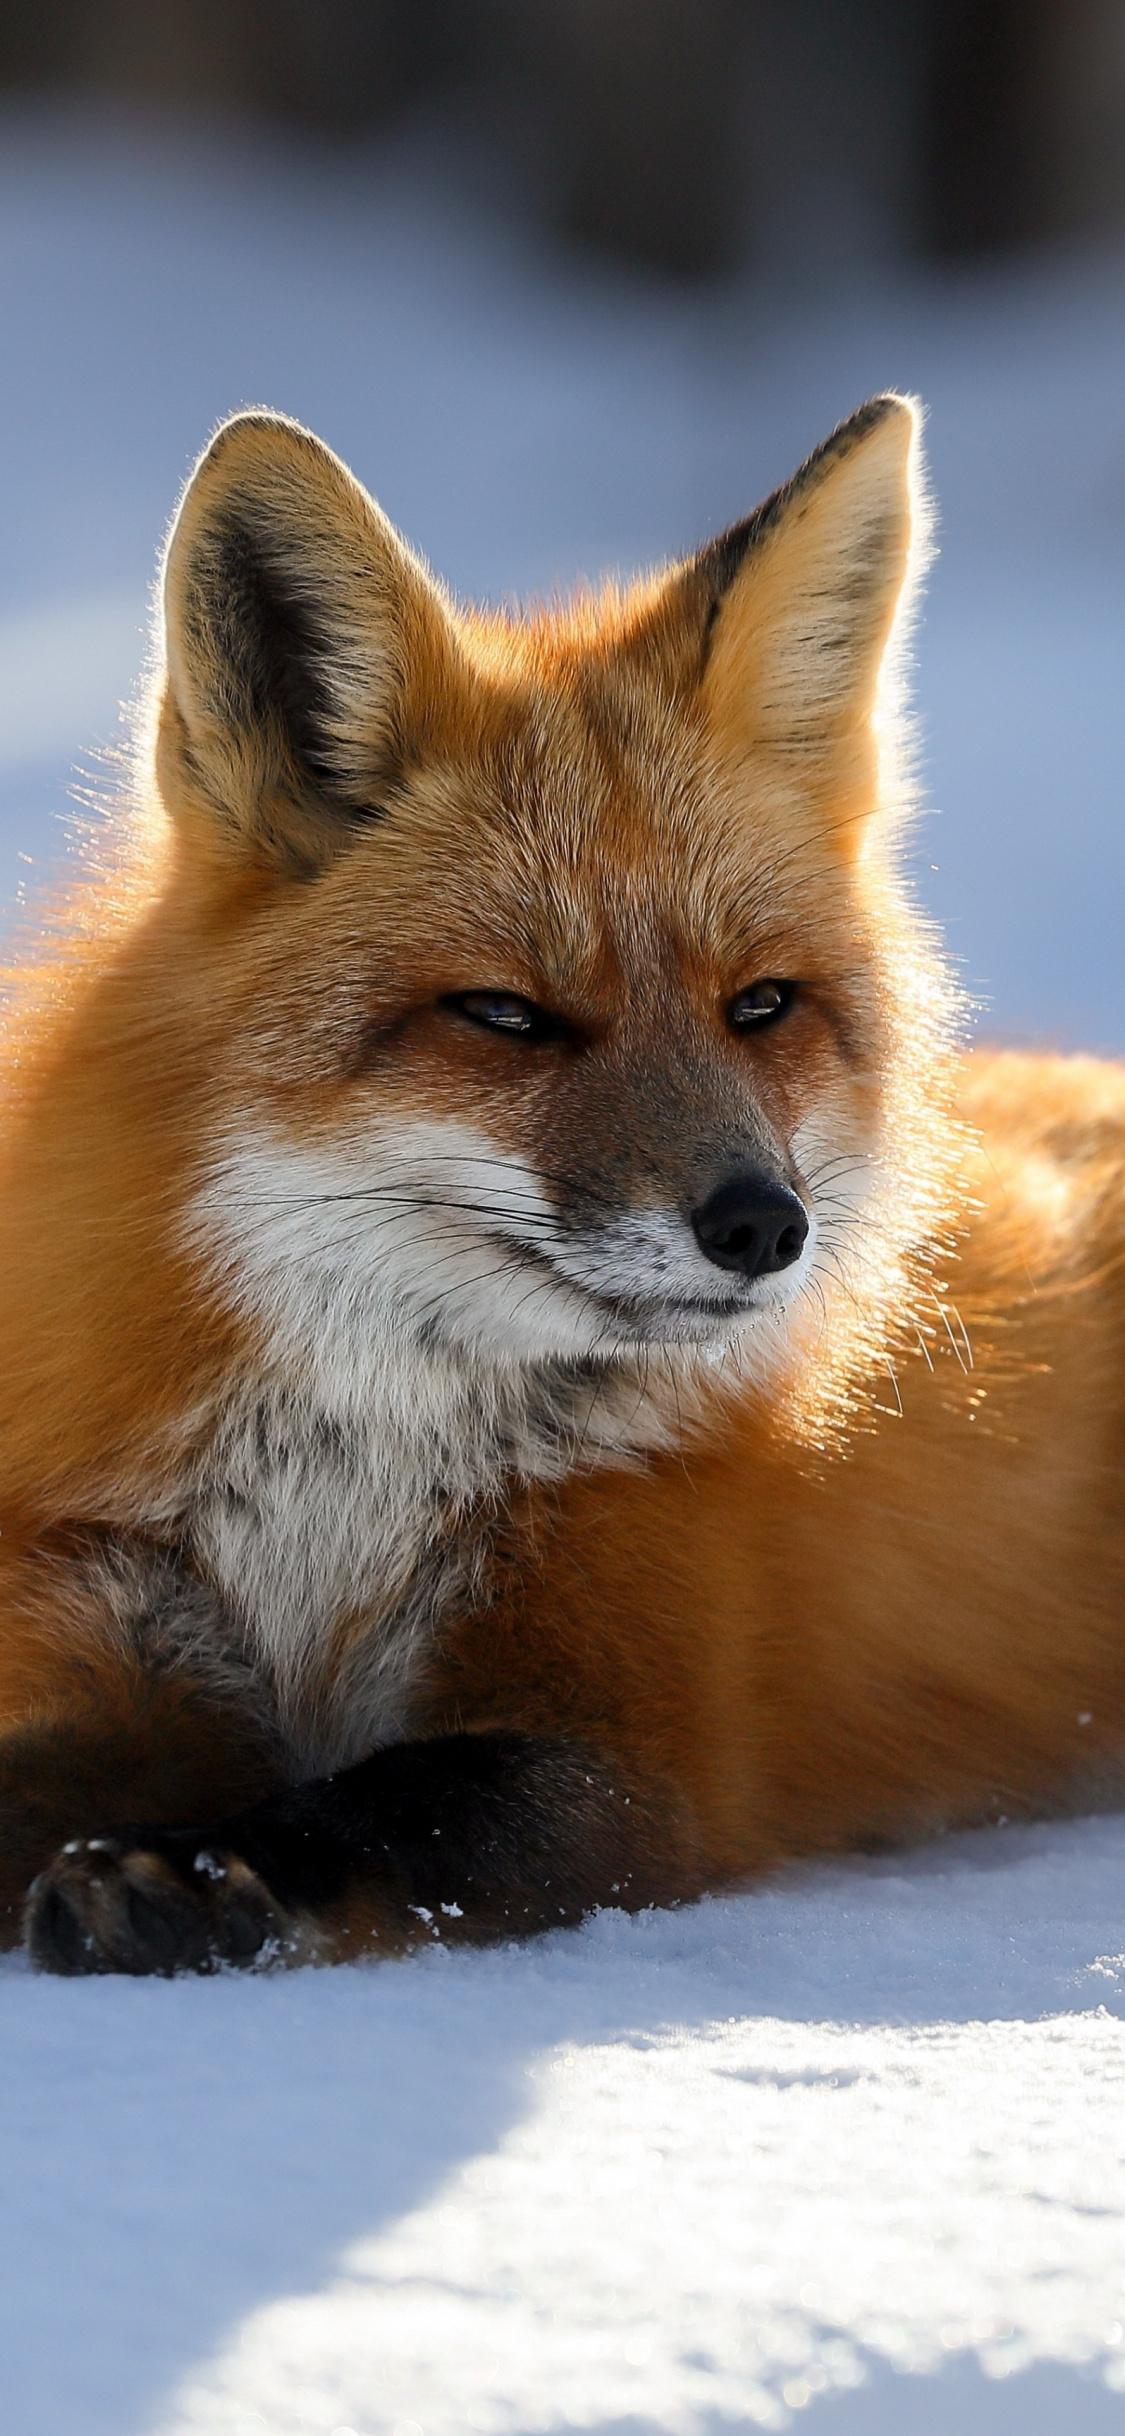 Download 1125x2436 wallpaper predator red fox animal 5k